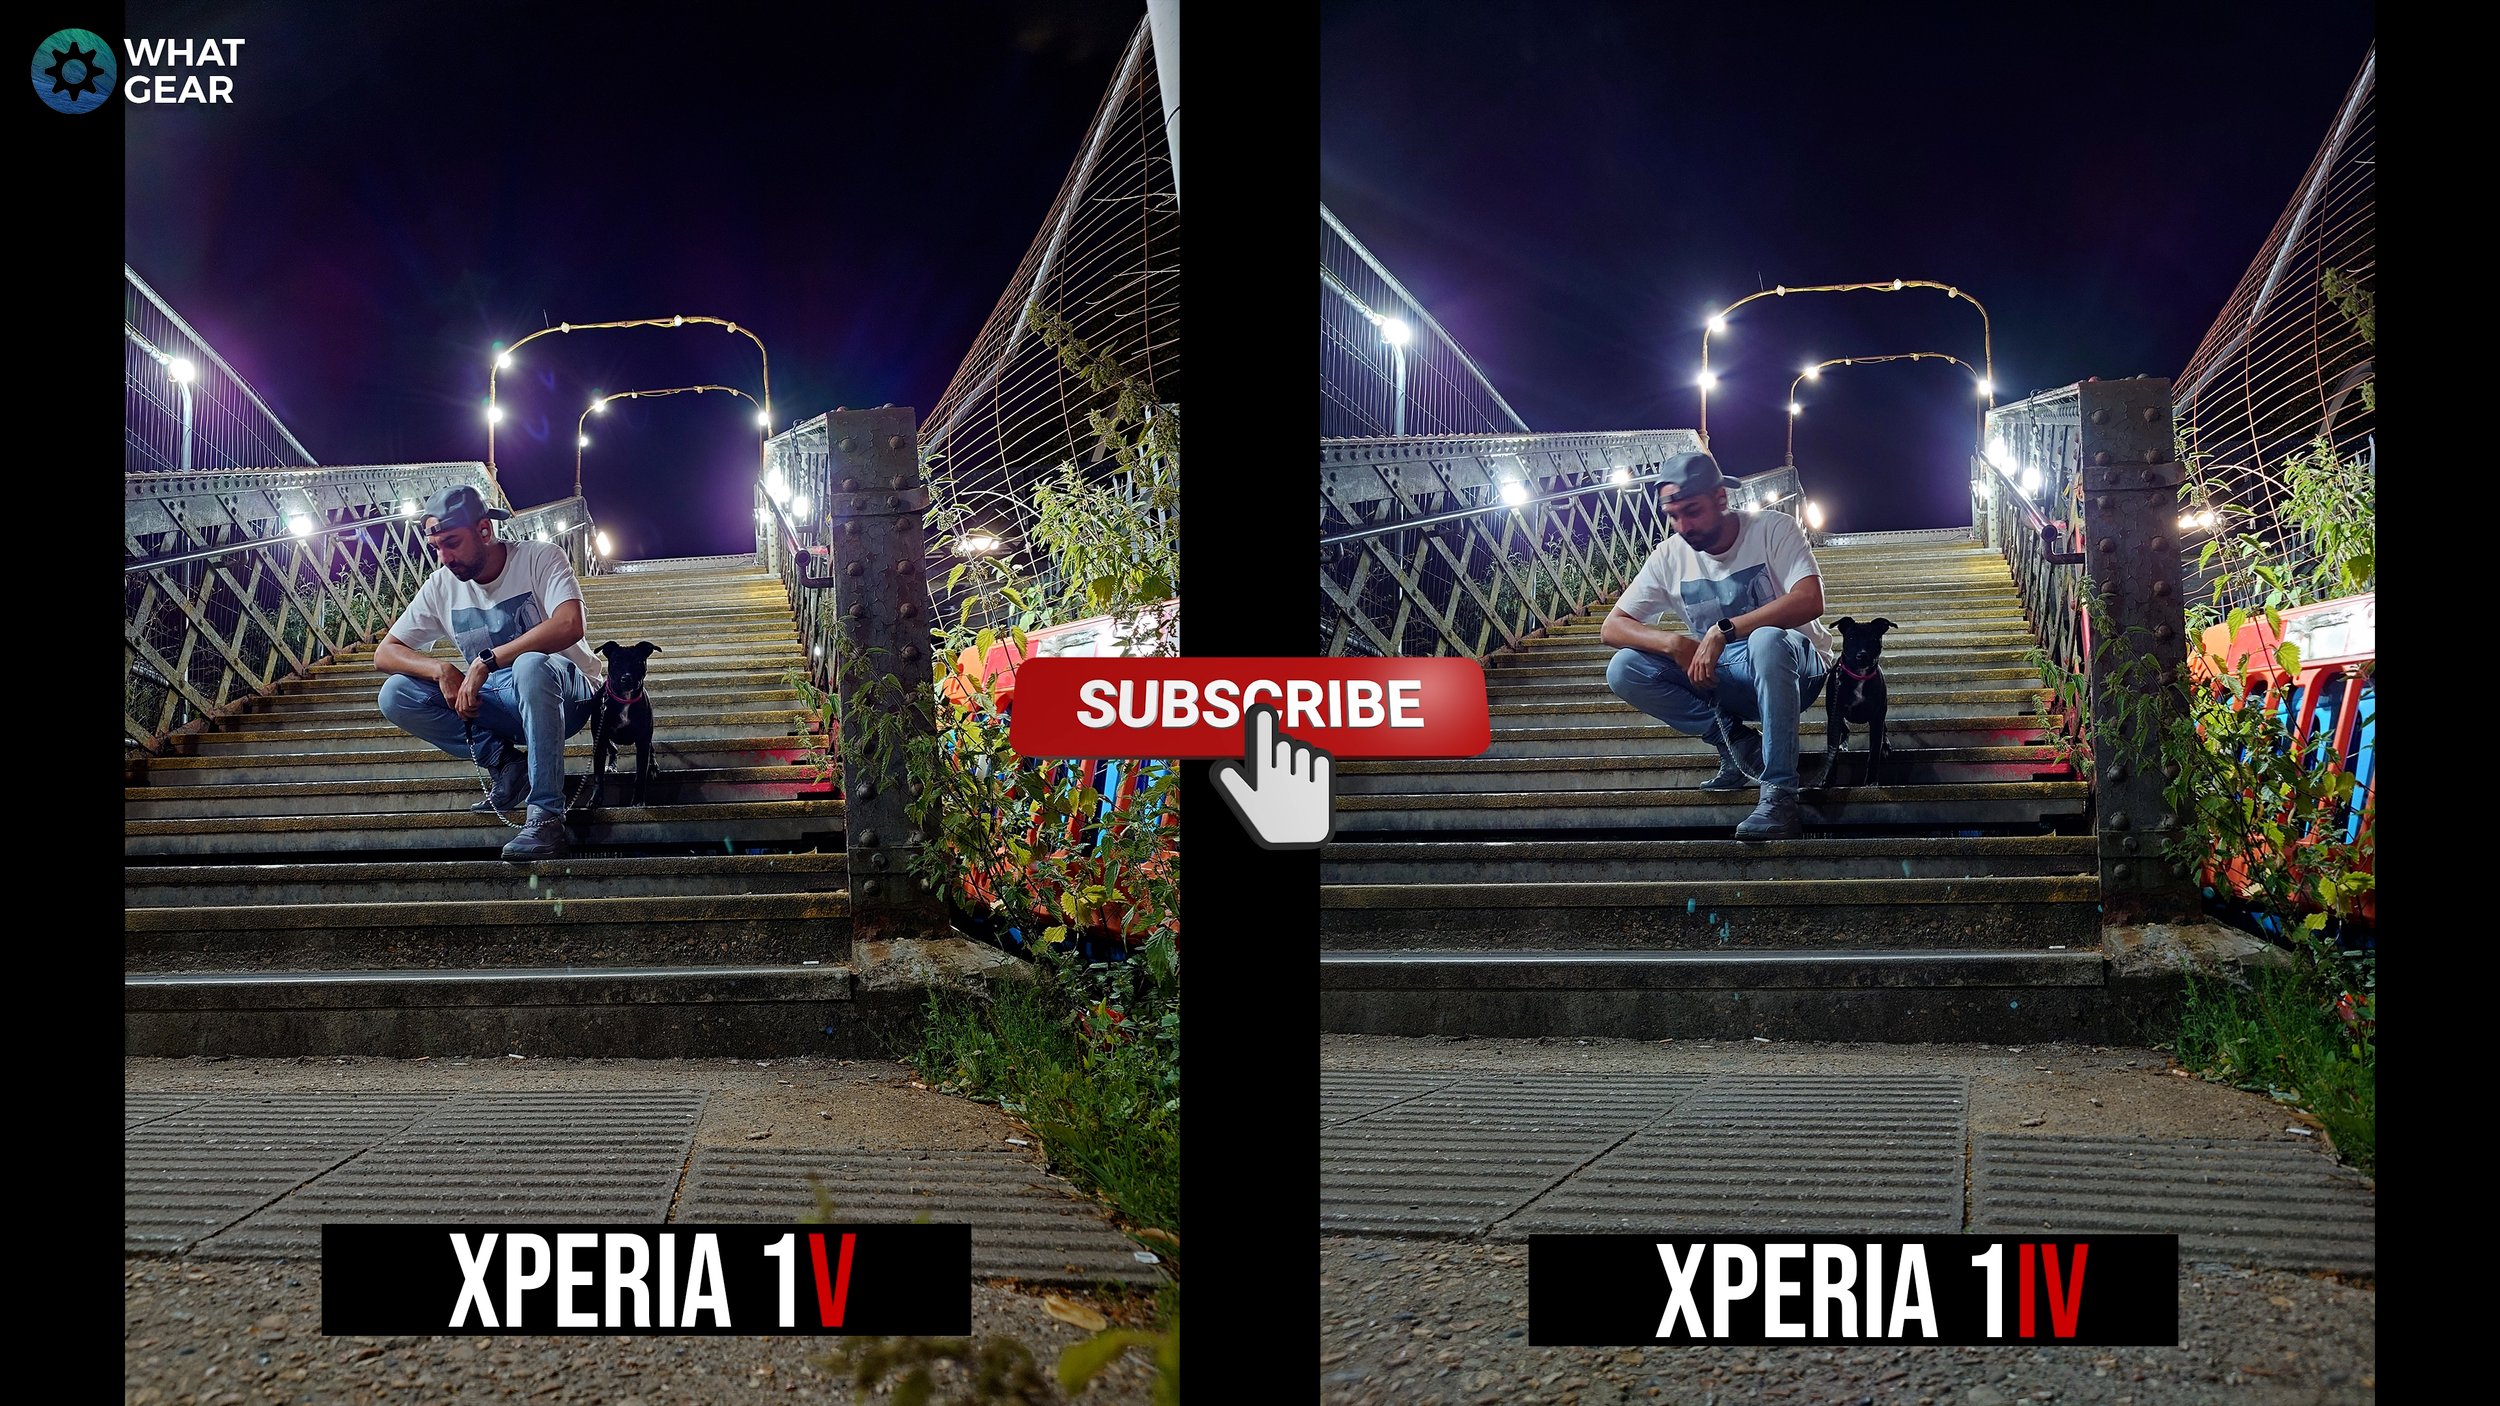 Sony Xperia 1 V vs Sony Xperia 10 V: What's the difference